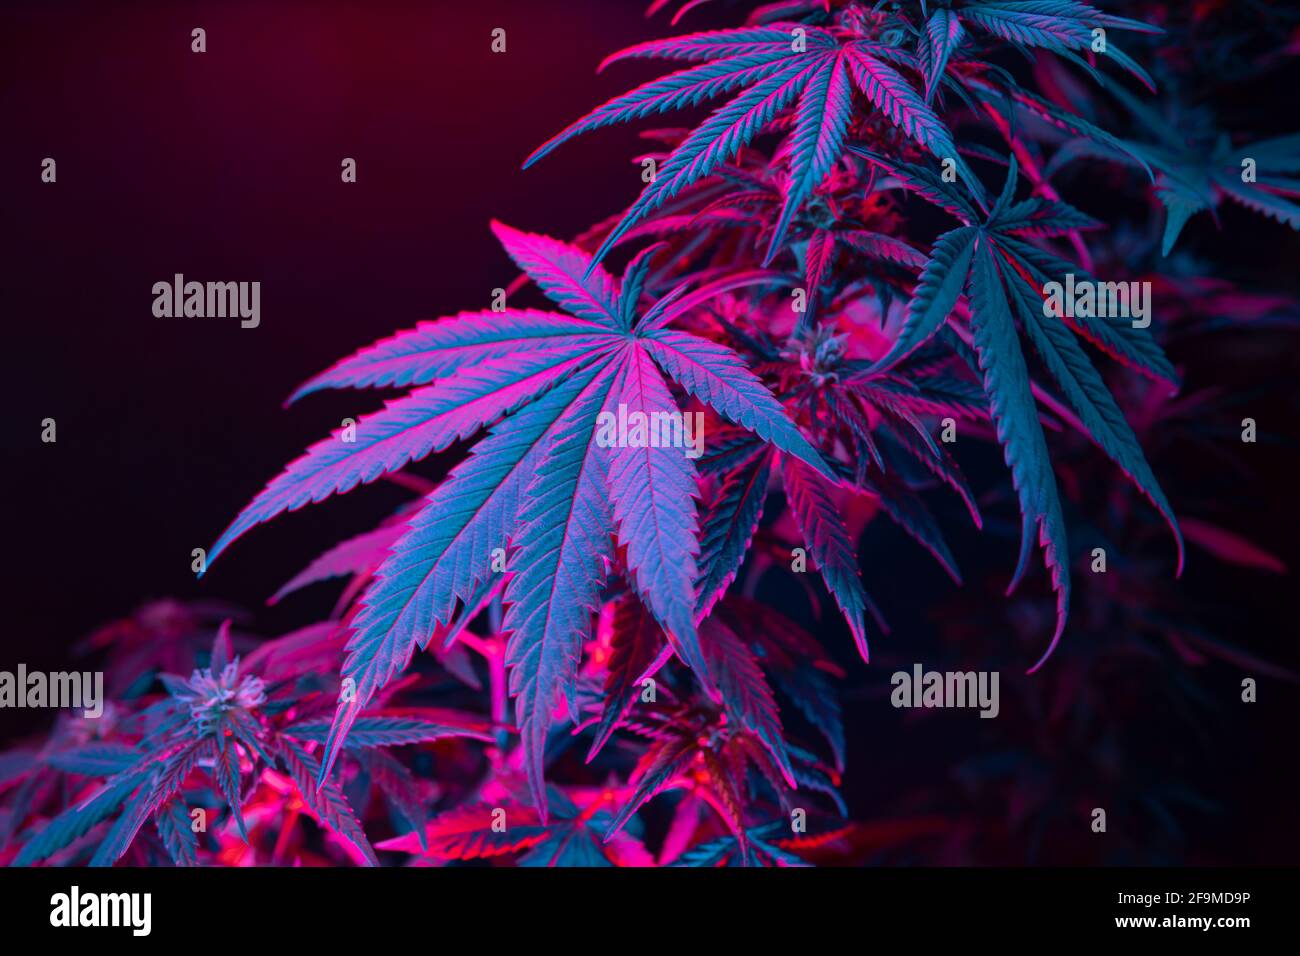 Cannabis leaves. Cannabis marijuana foliage with a purple pink tint on a black background. Large leaf of cannabis plant in purple light. Medicinal hem Stock Photo